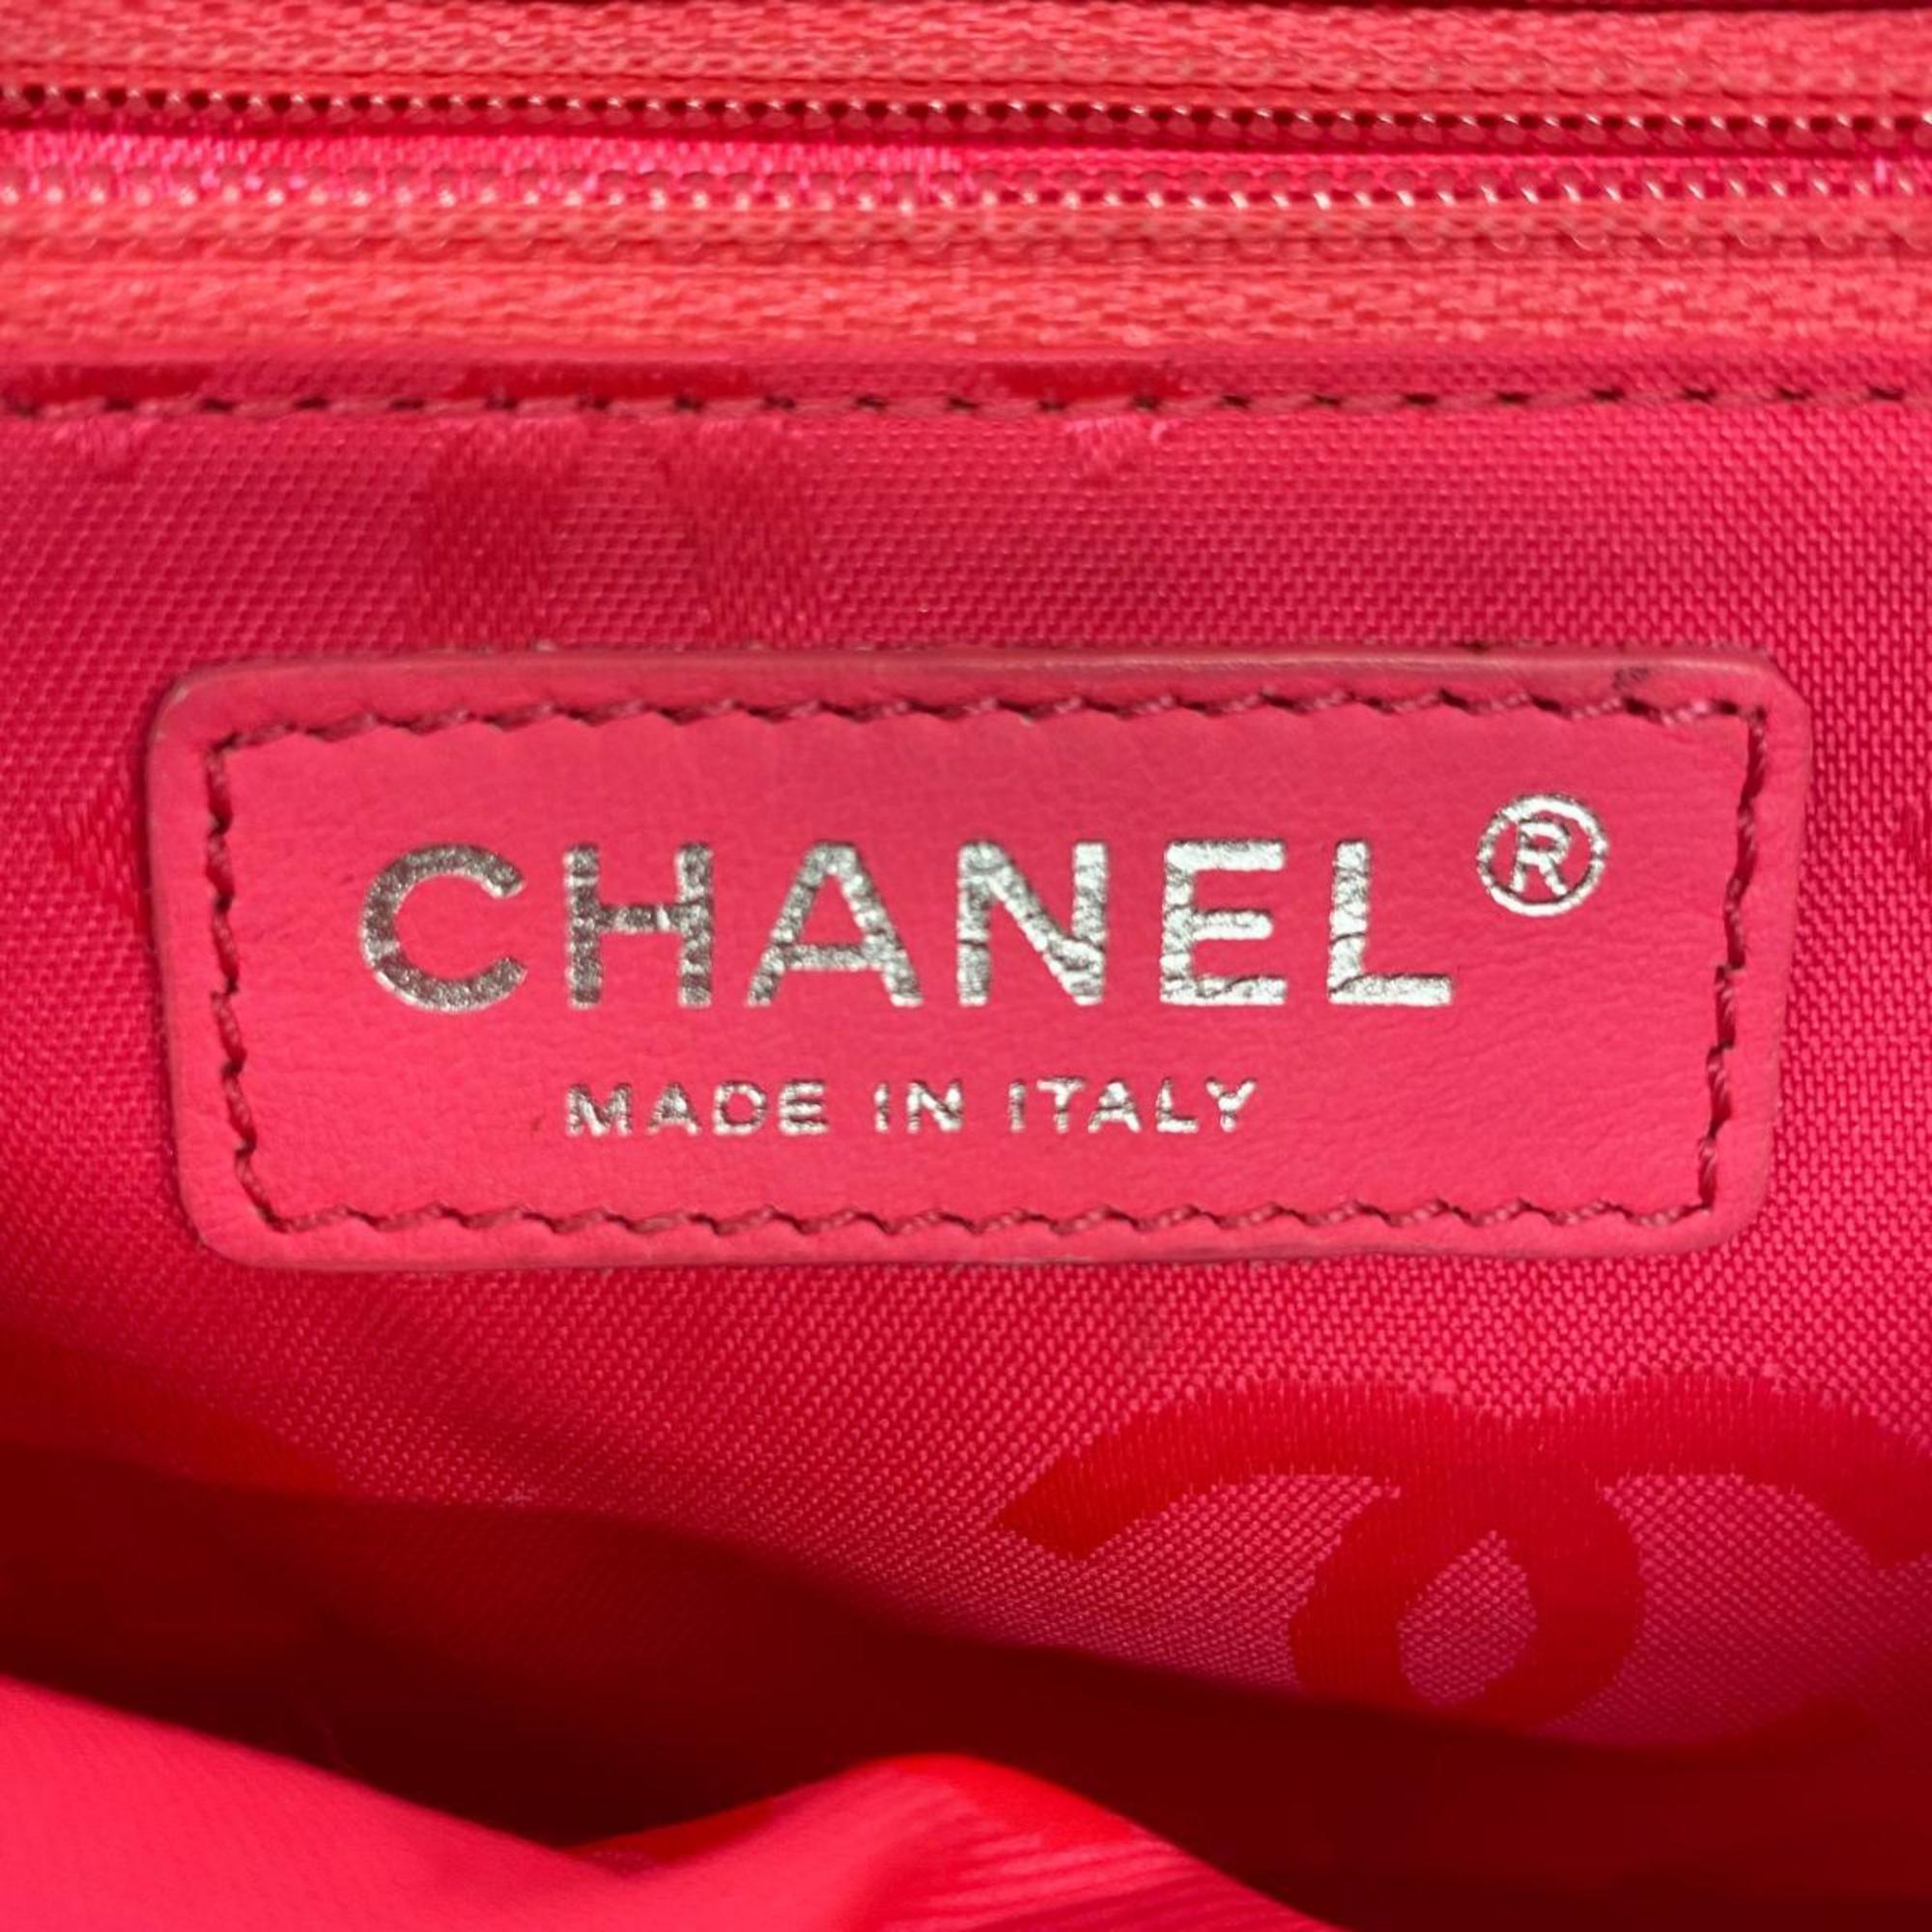 Chanel handbag Cambon lambskin white ladies